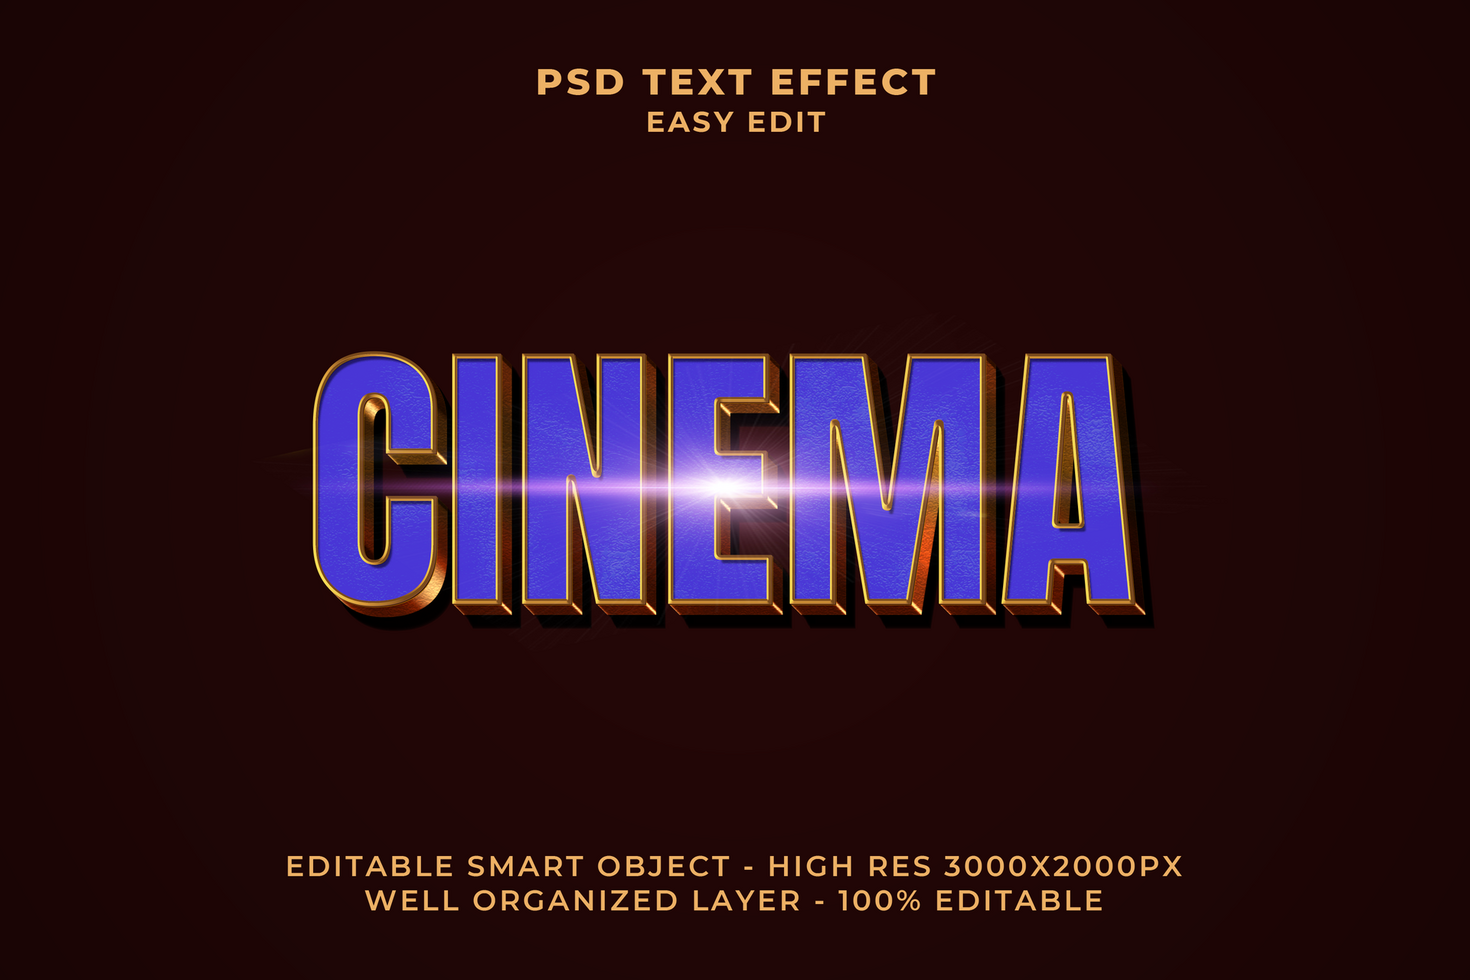 bioscoop tekst effect psd